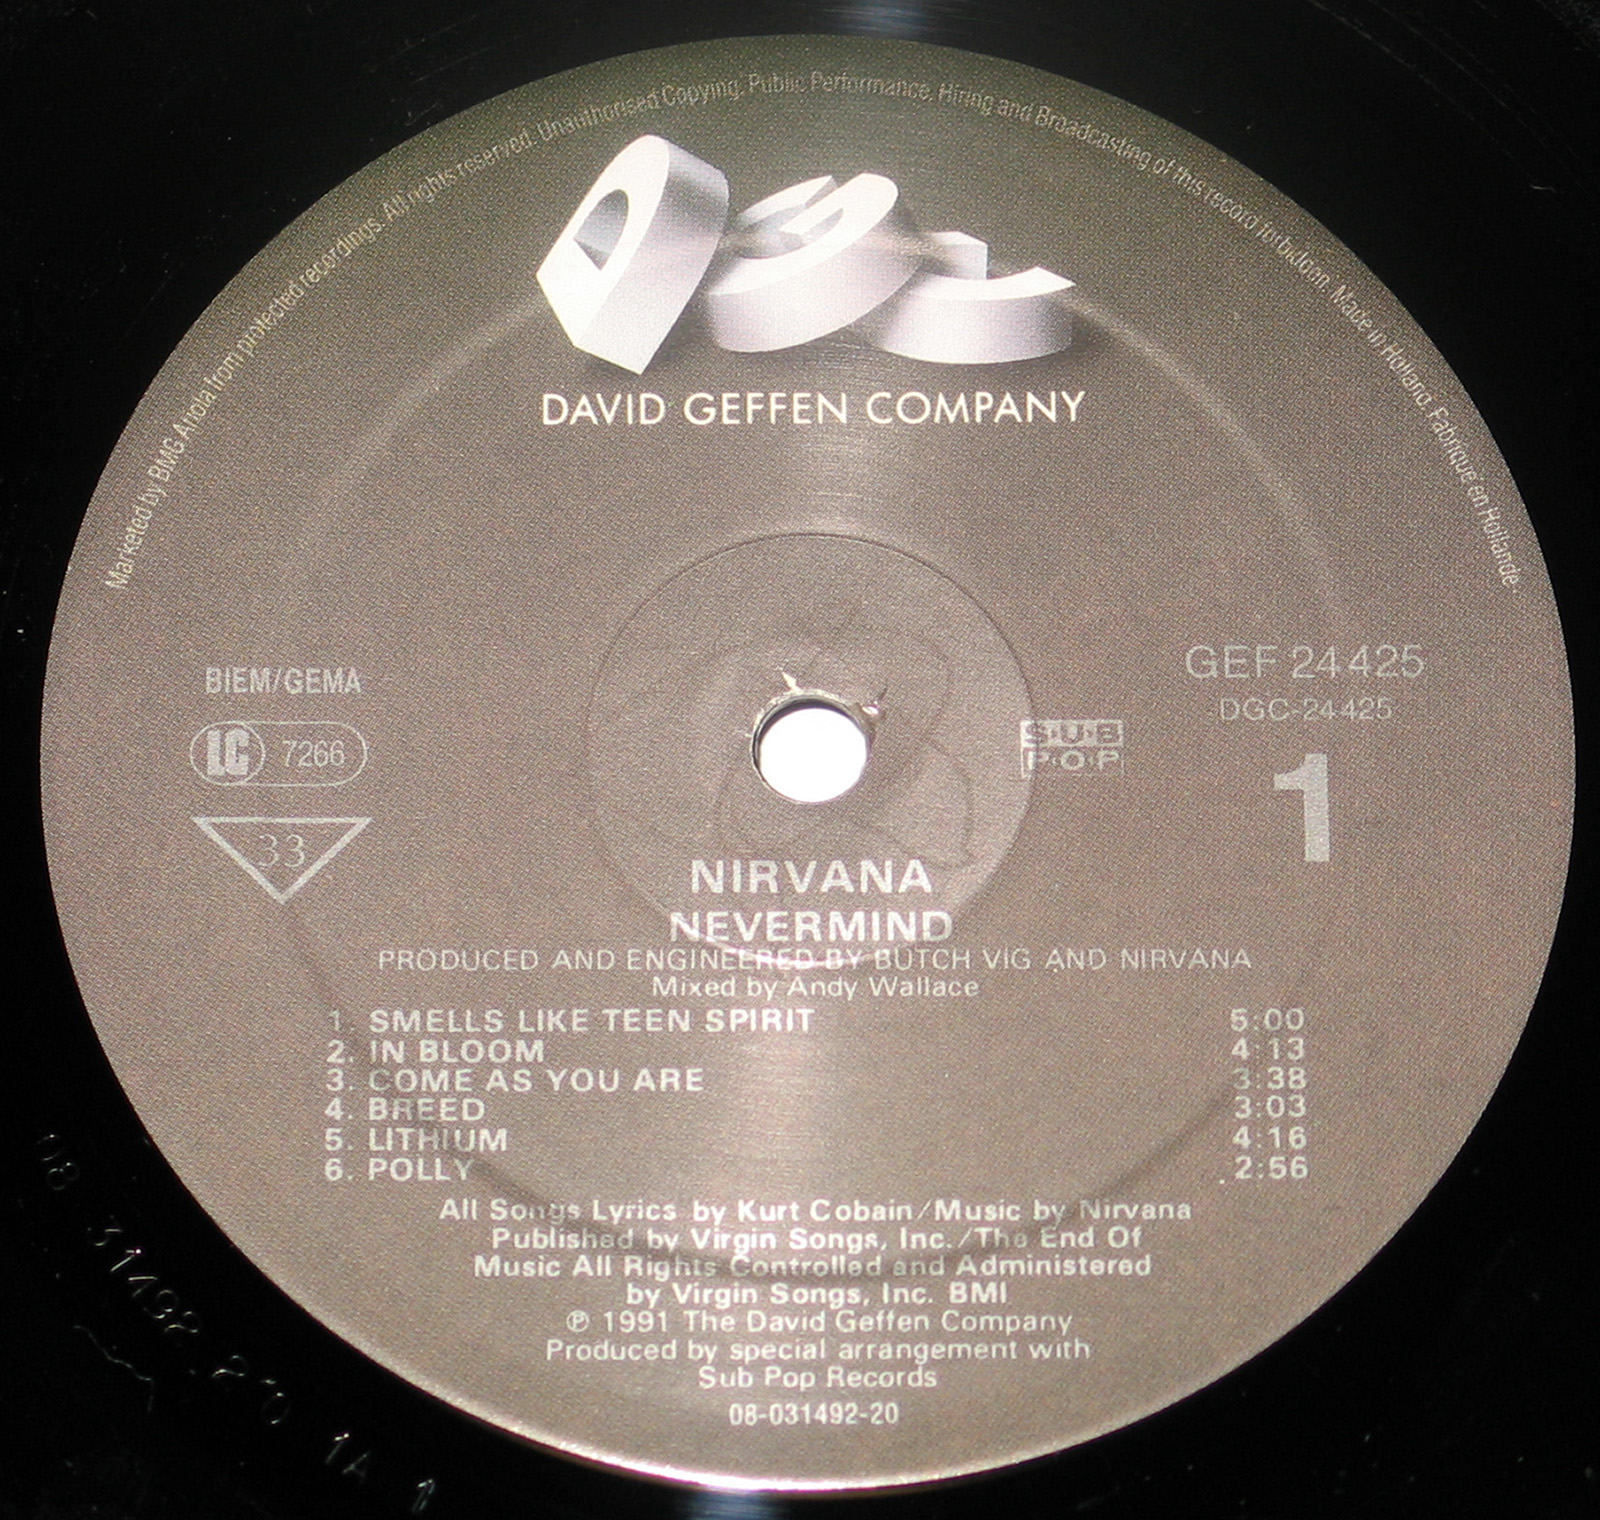 NIRVANA Nevermind Vinyl Album Cover Gallery & Information #vinylrecords